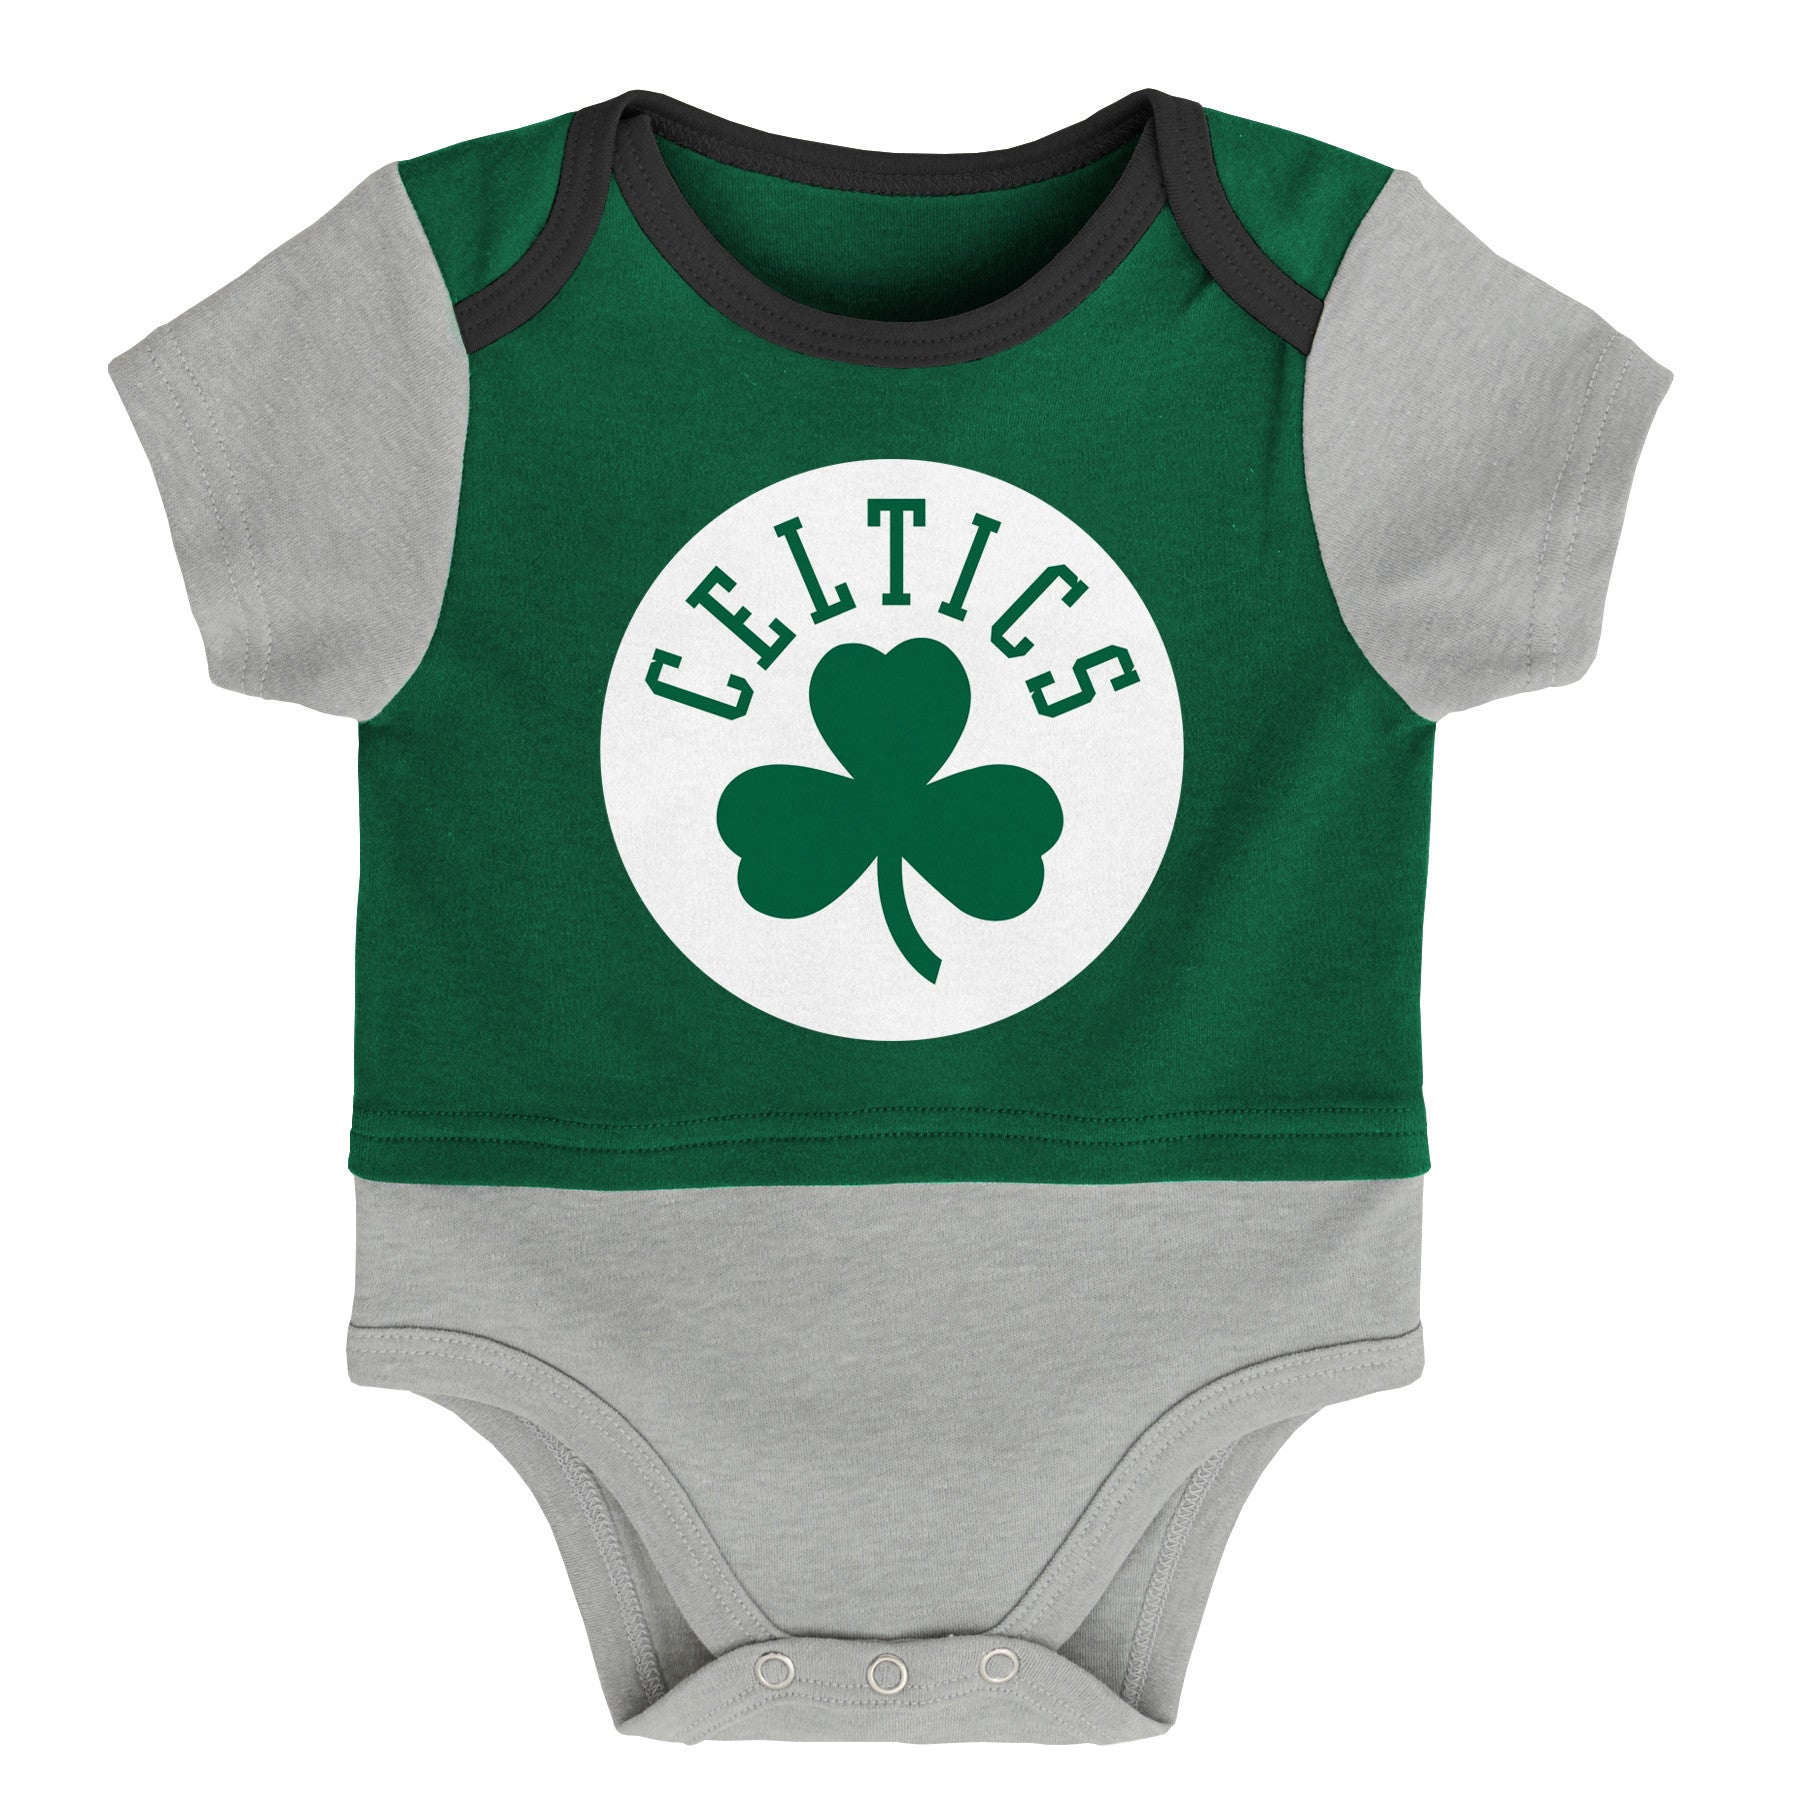 celtics baby clothes